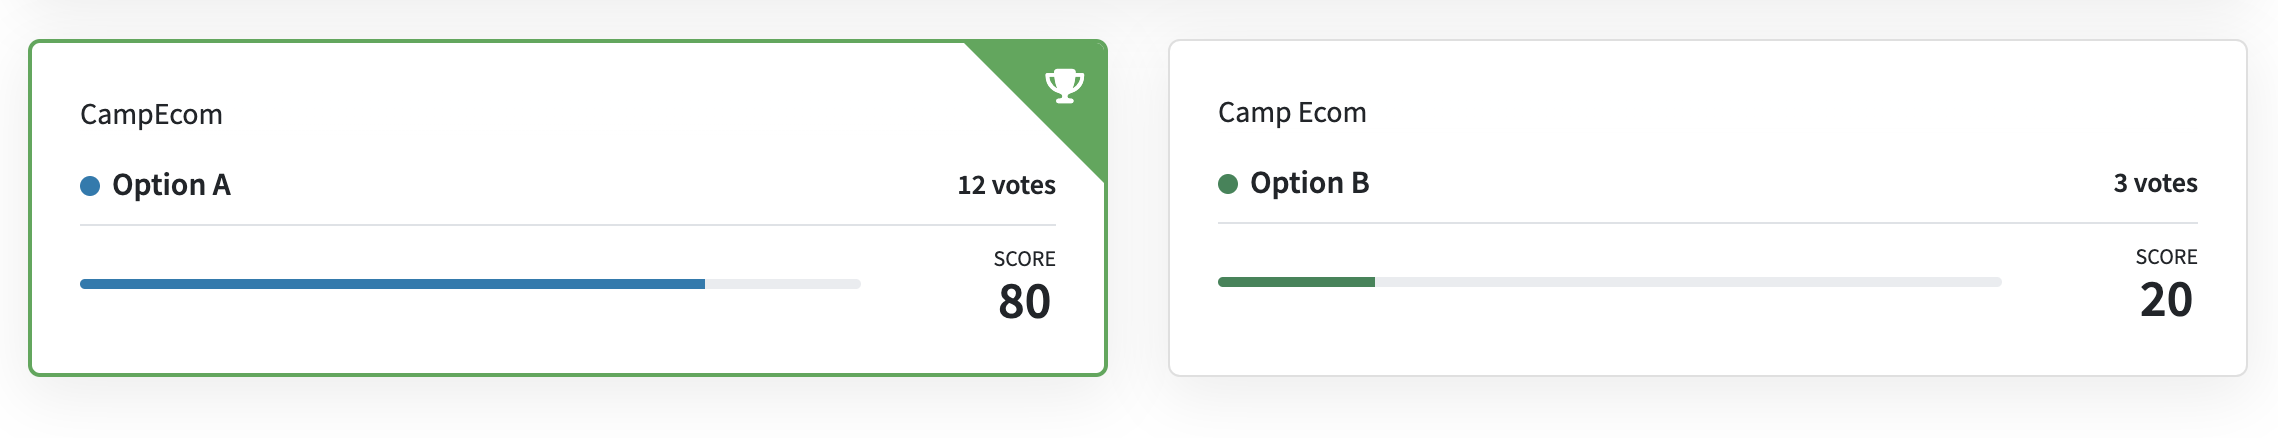 Poll results for CampEcom logo test.